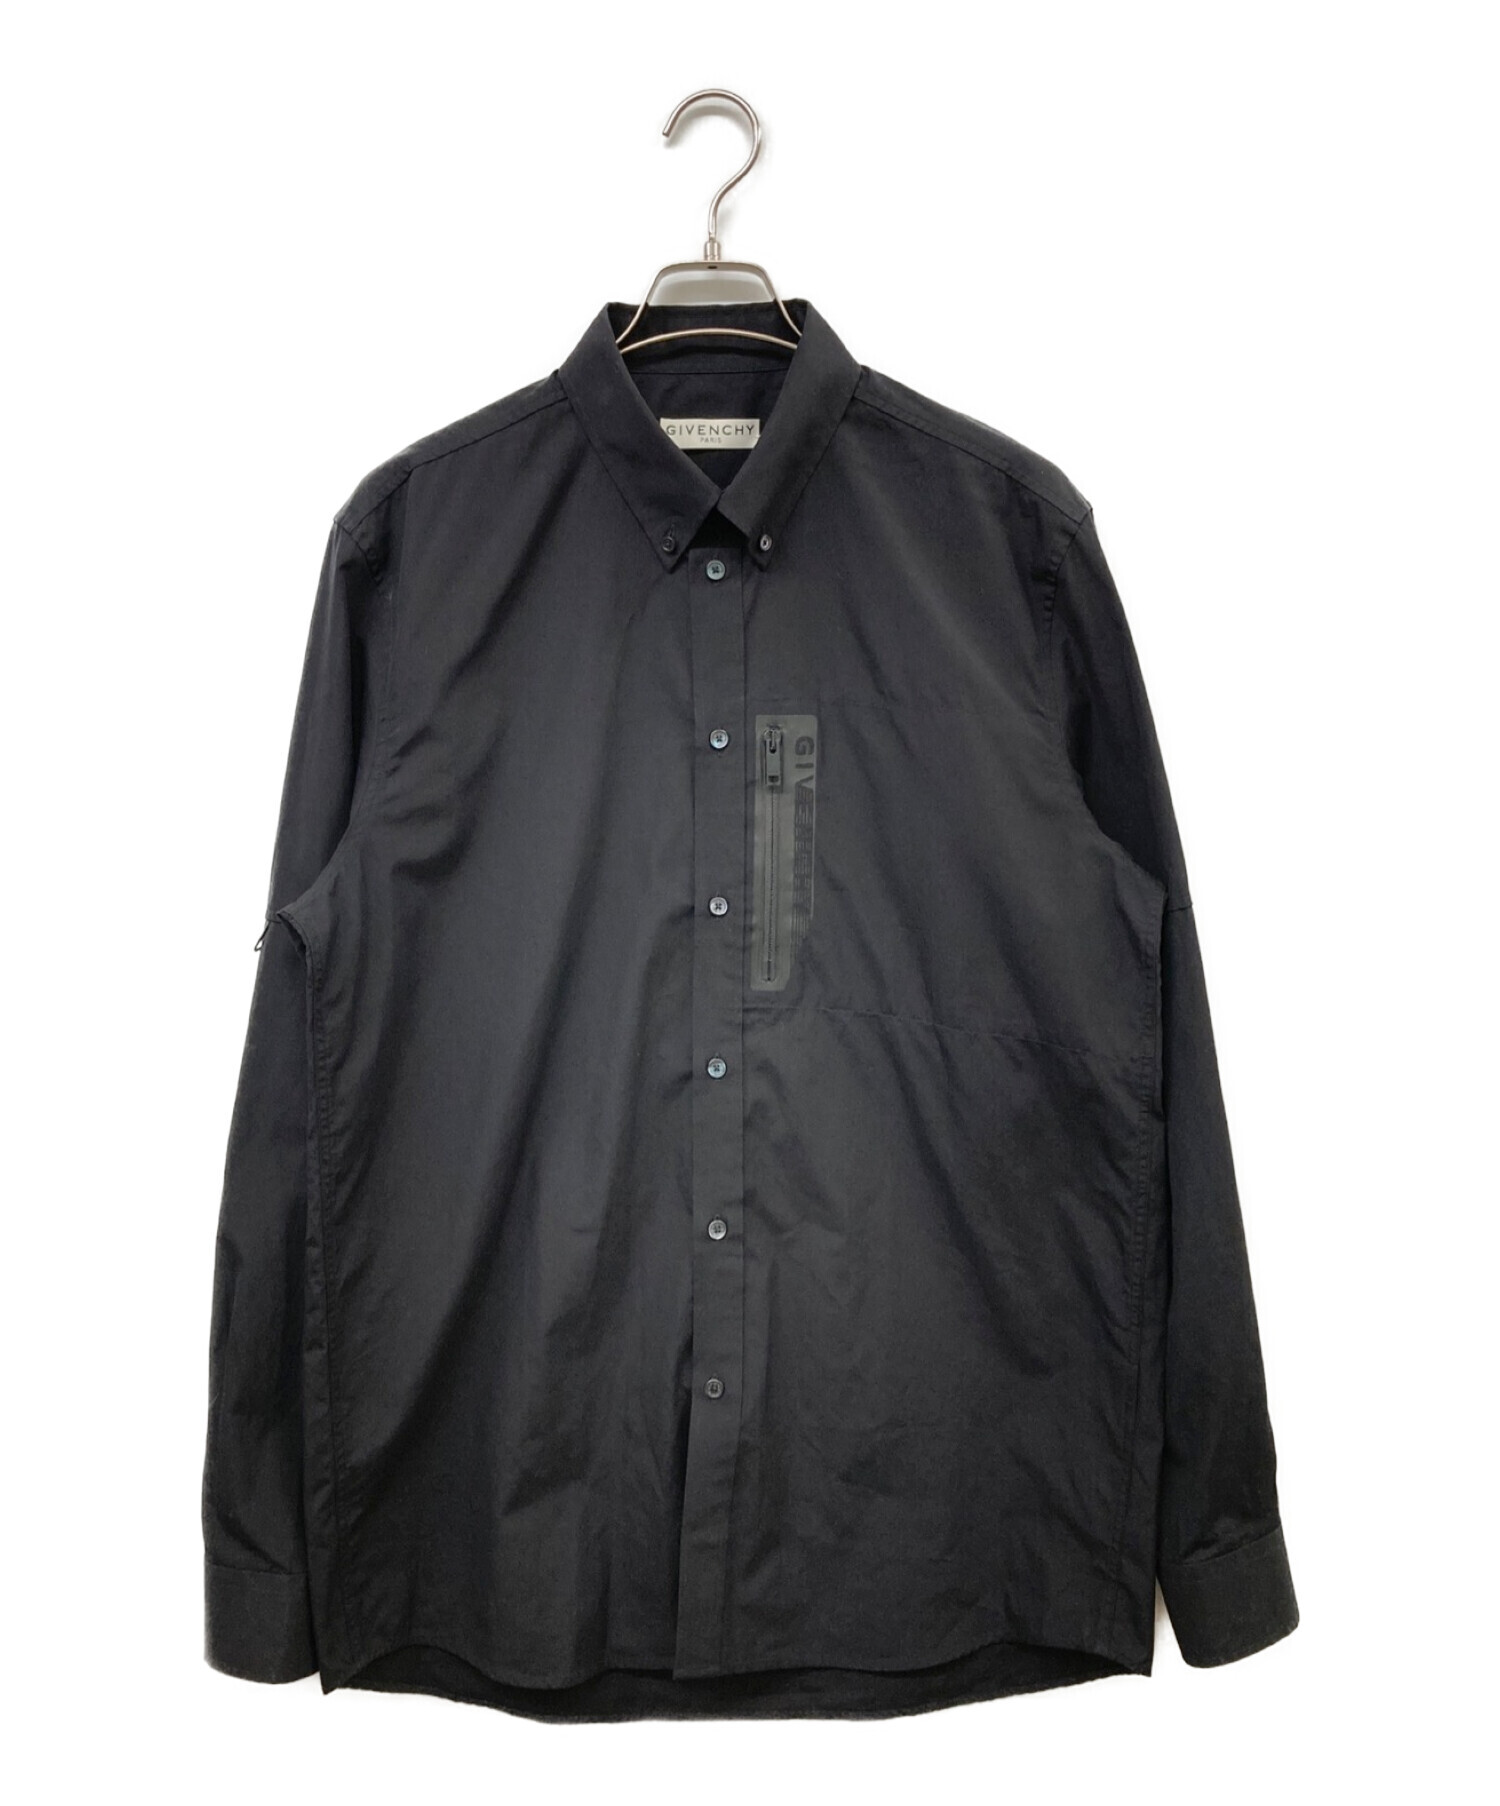 GIVENCHY (ジバンシィ) ジップポケットシャツ ブラック サイズ:41